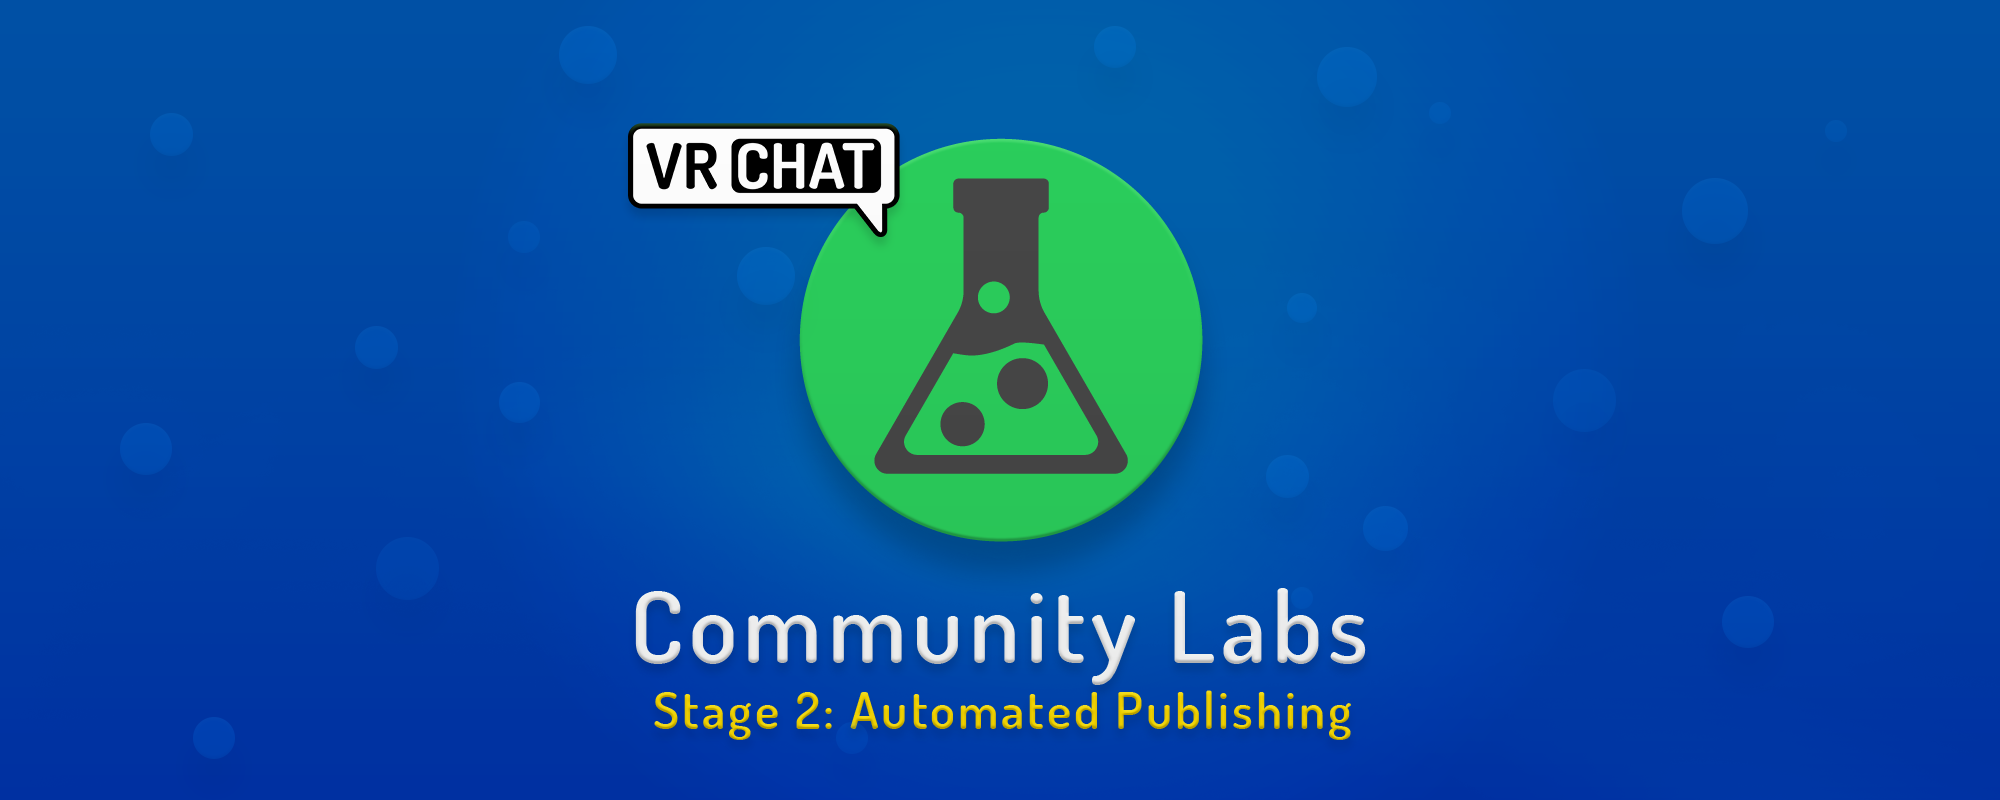 Vrchat Community Labs Stage 2 Vrchat Medium